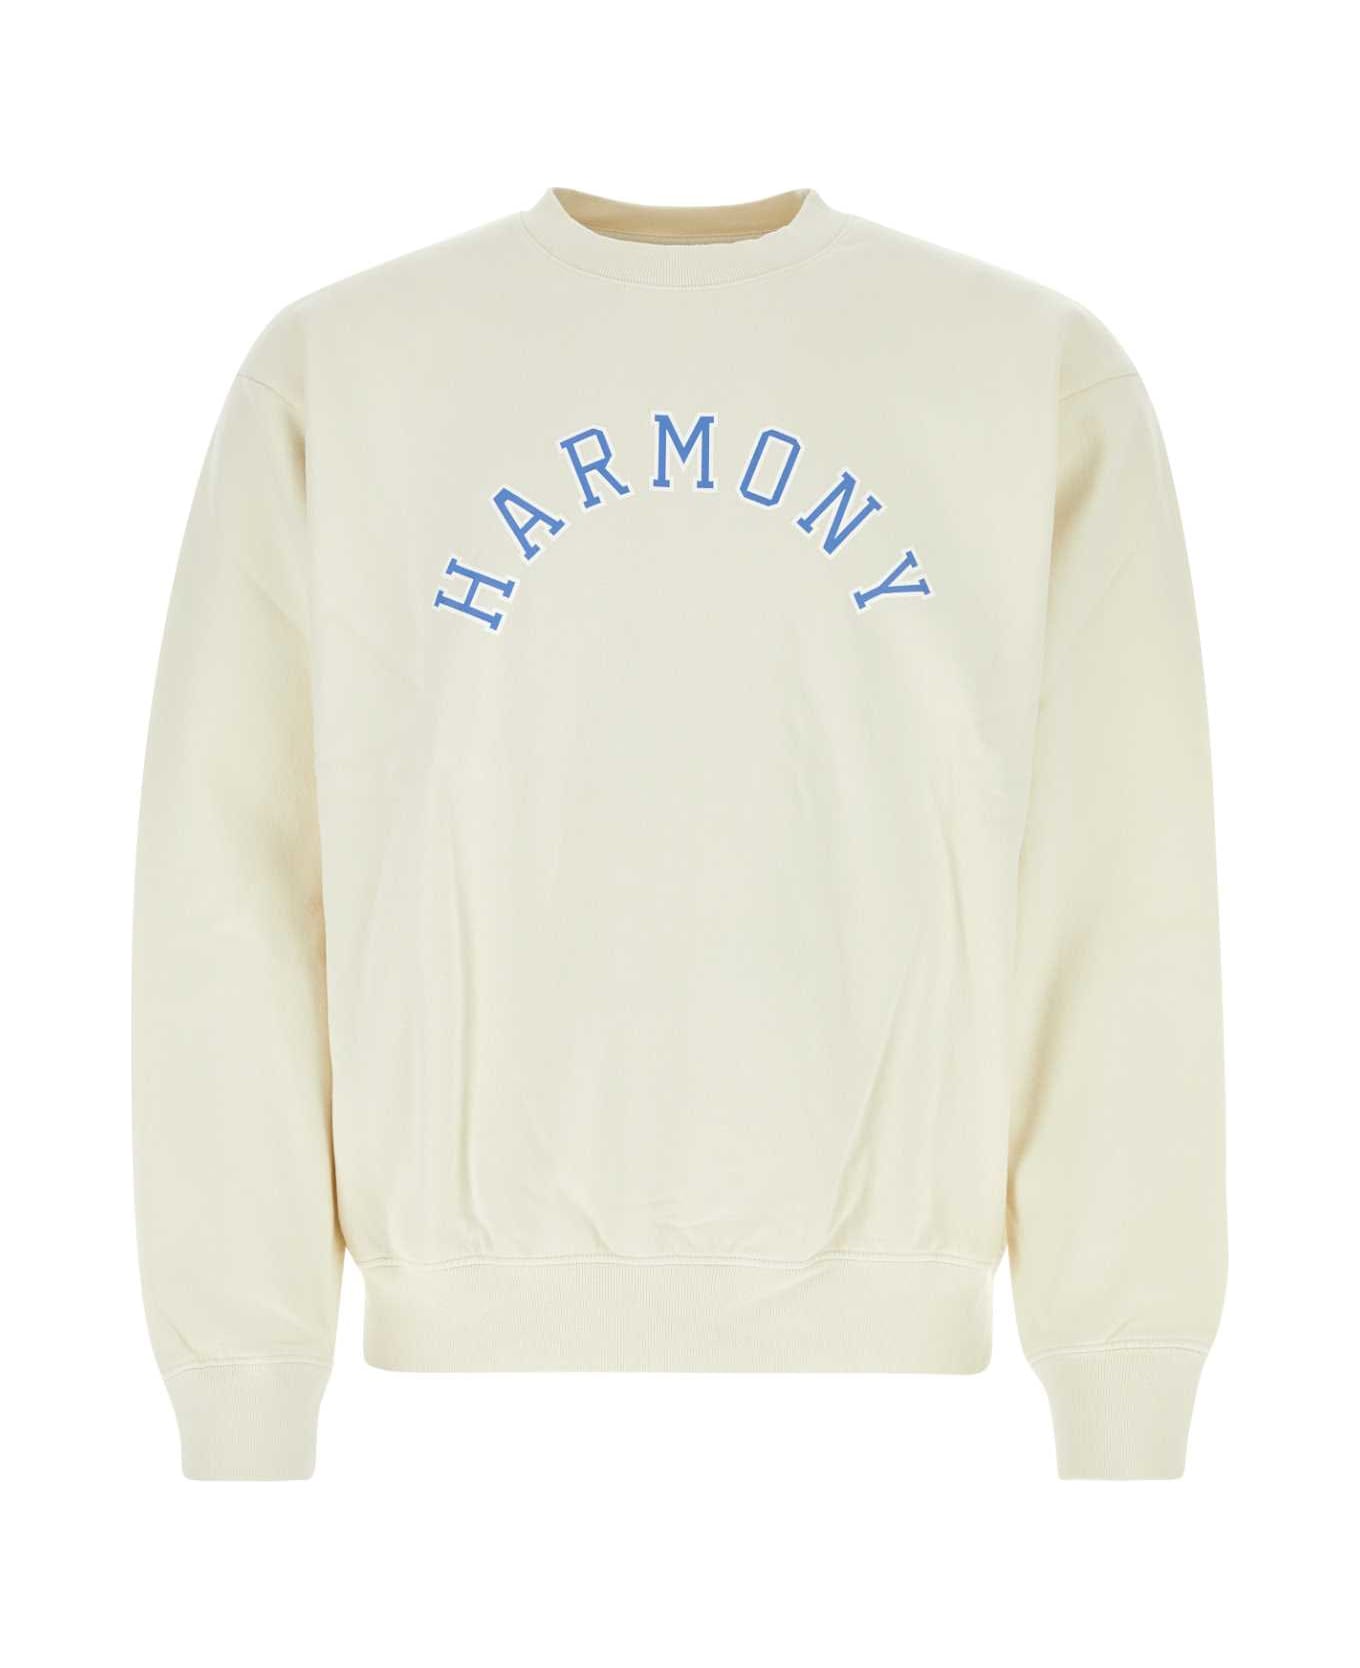 The Harmony Ivory Cotton Sweatshirt - 046